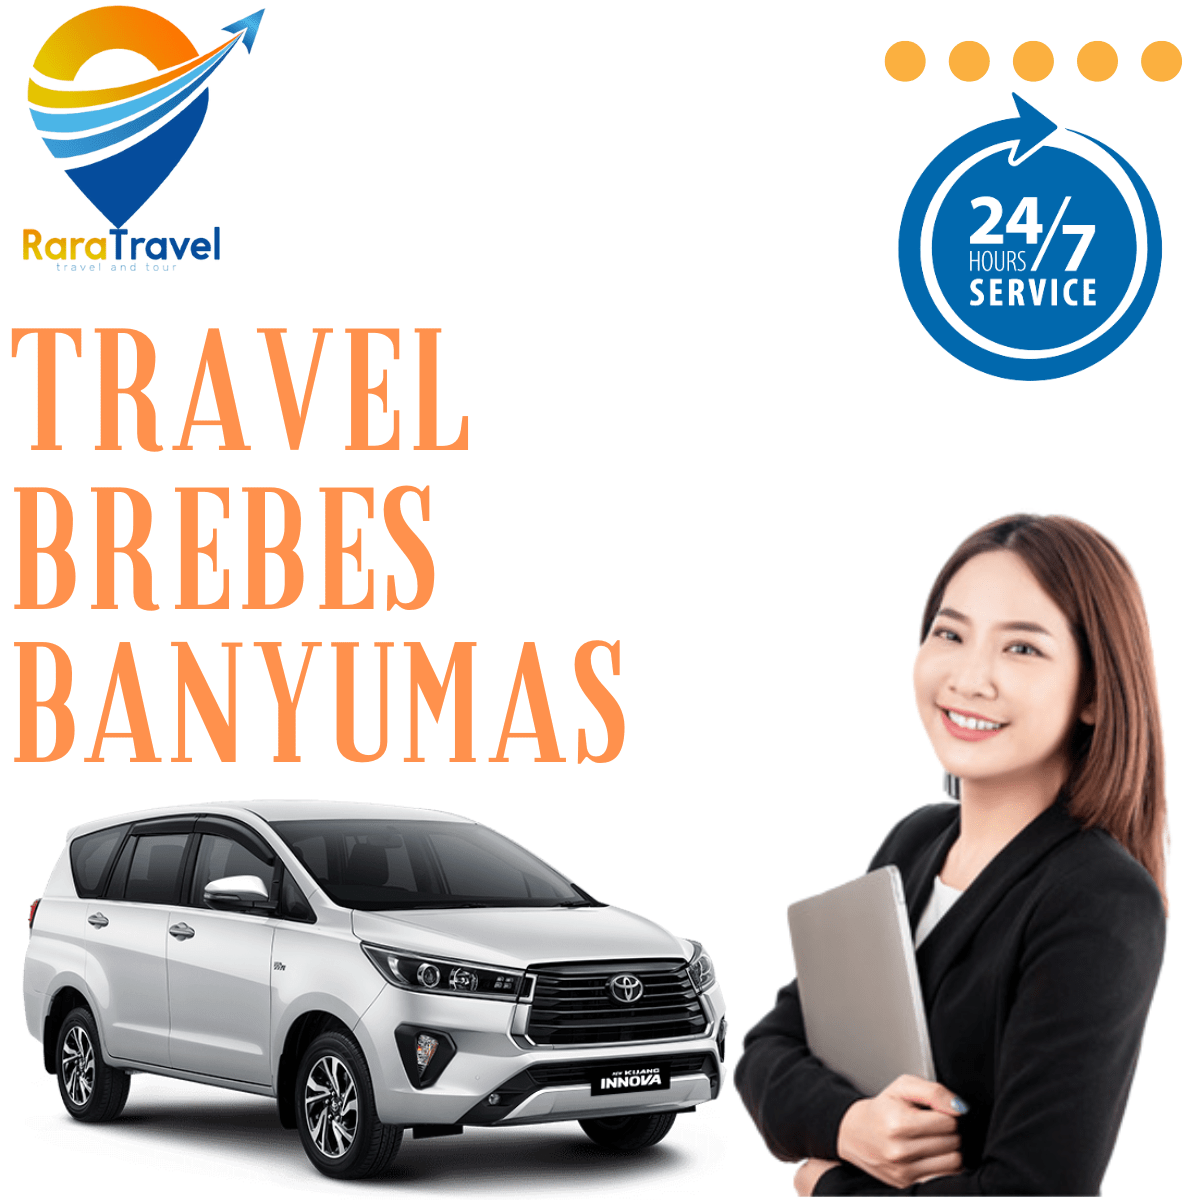 Travel Brebes Banyumas Murah - RARATRAVEL.ID